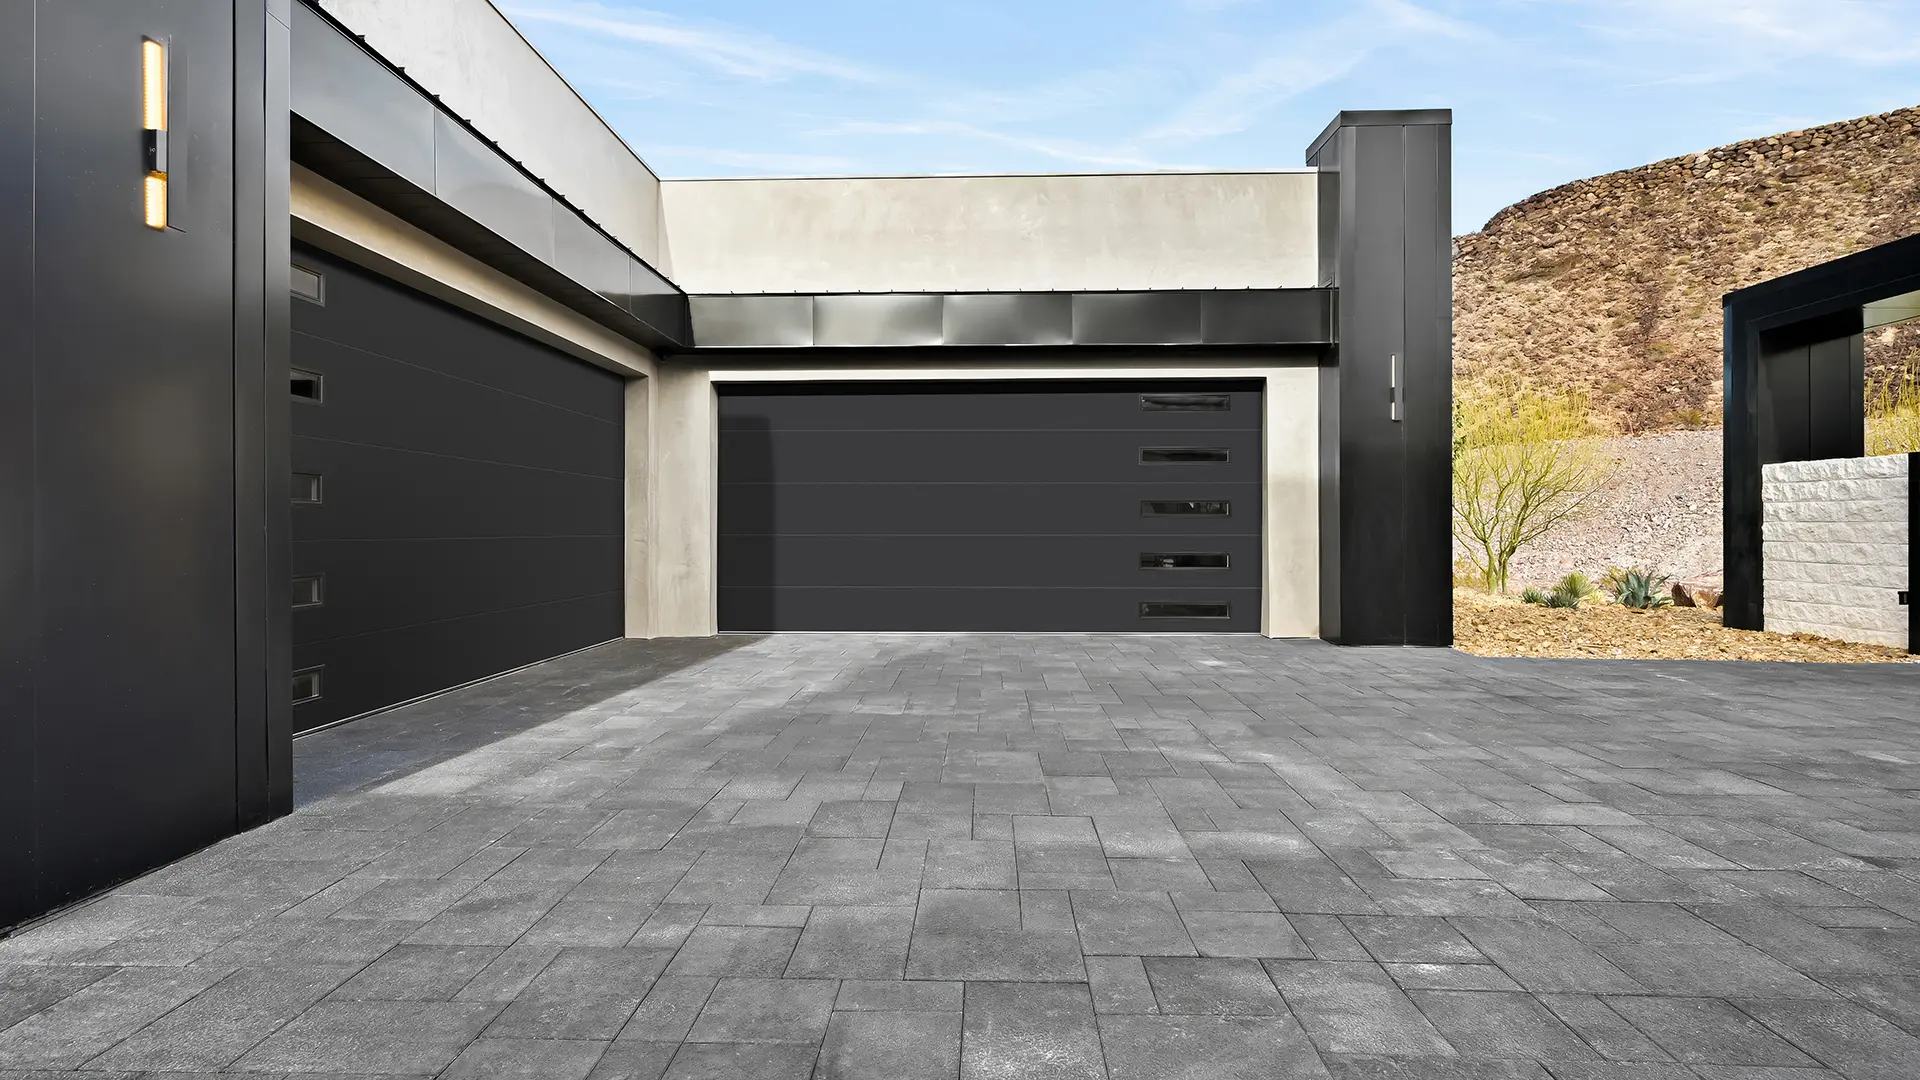 Clopay® Brings Fashionable Matte Finish to Modern Steel Garage Doors